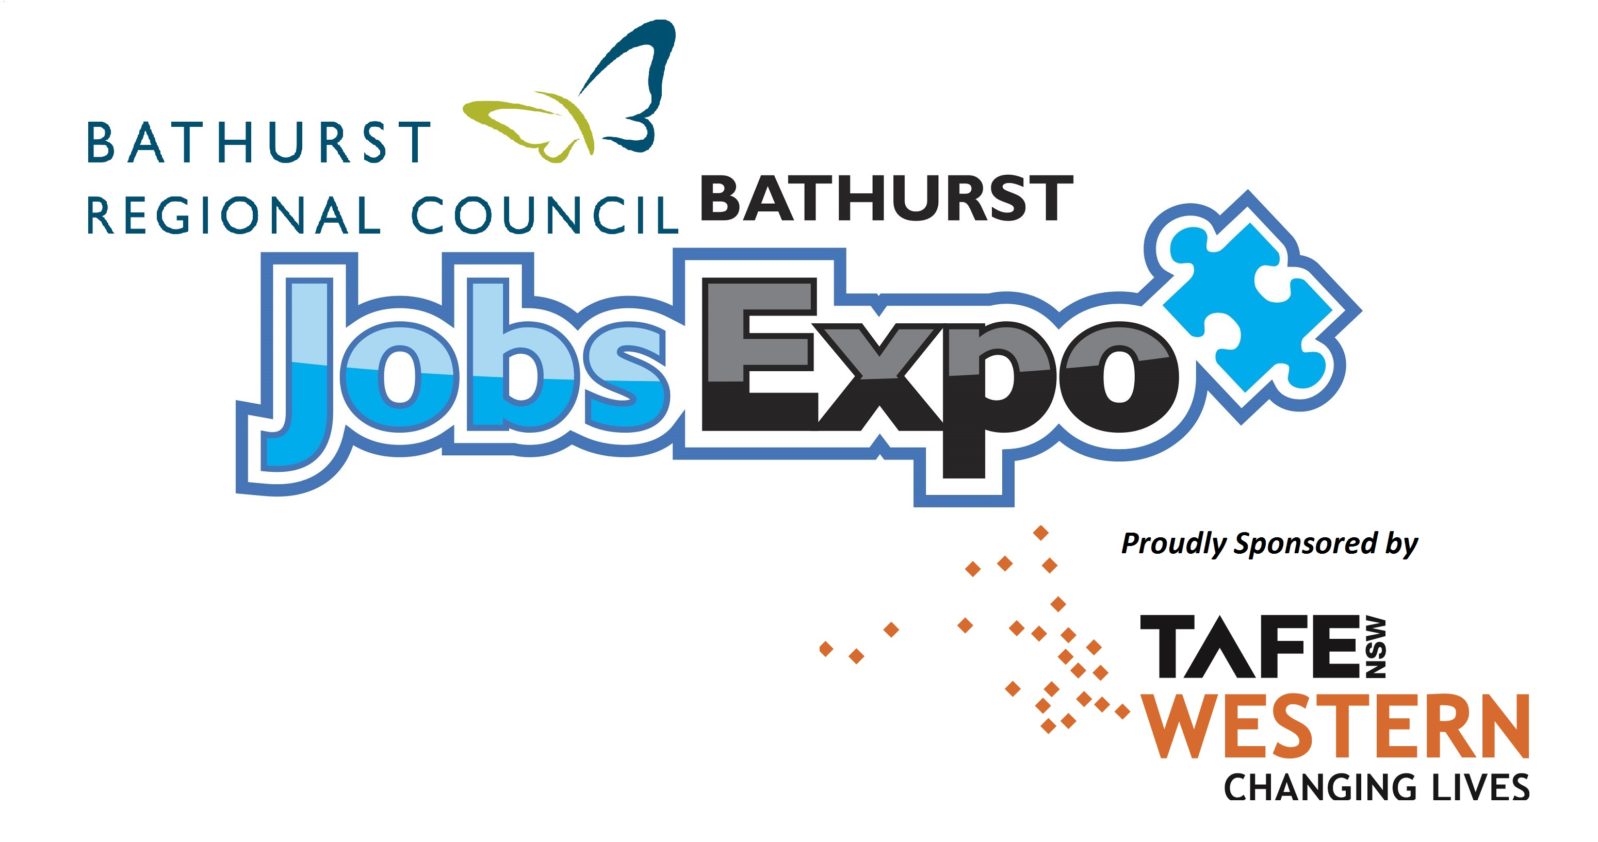 Bathurst Jobs Expo